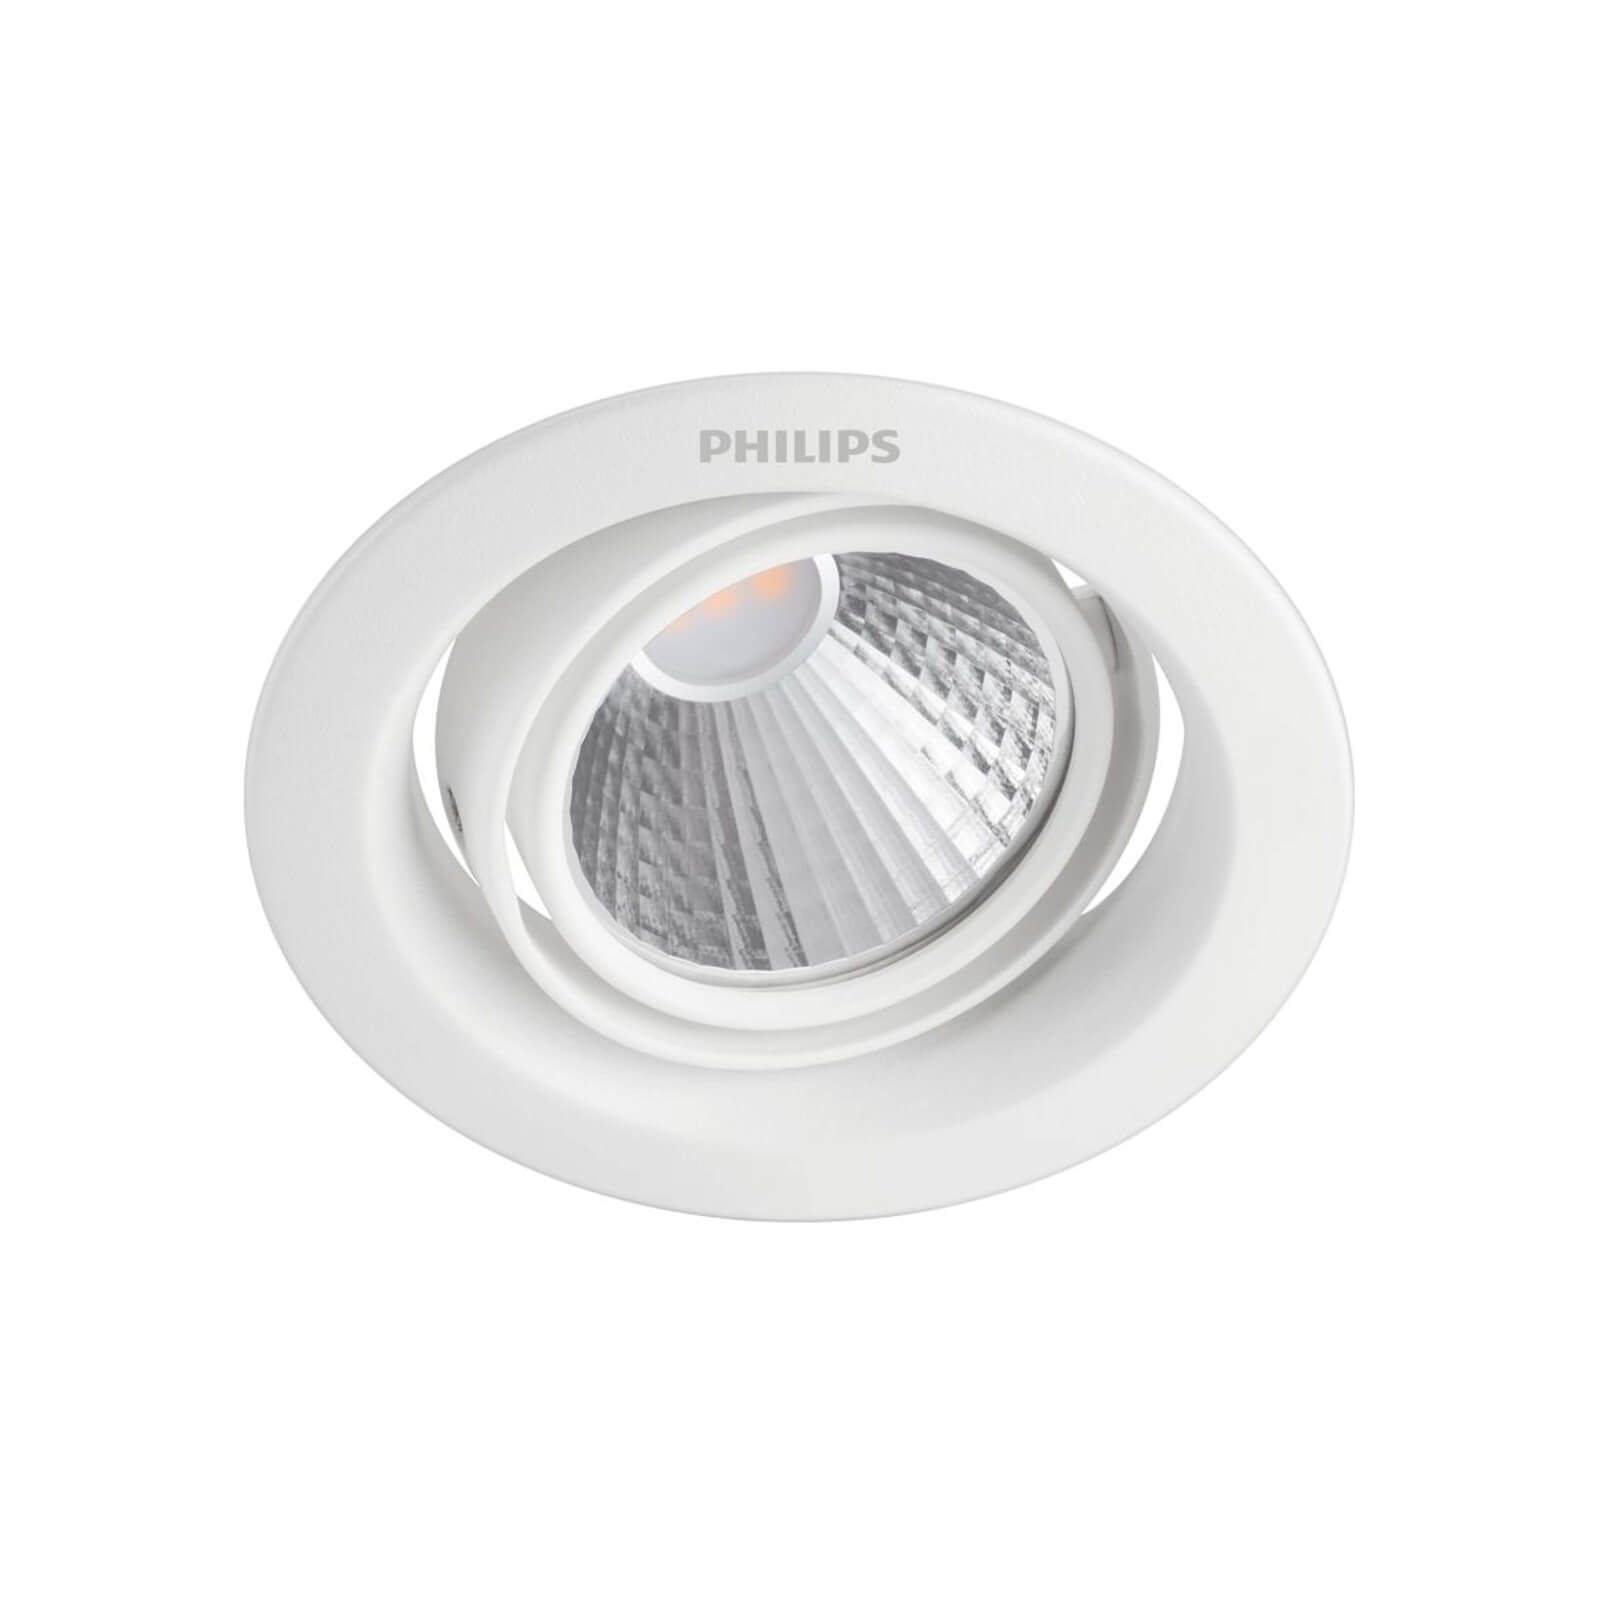 Philips Pomeron - inbouwspot - warm tot koel wit licht - wit